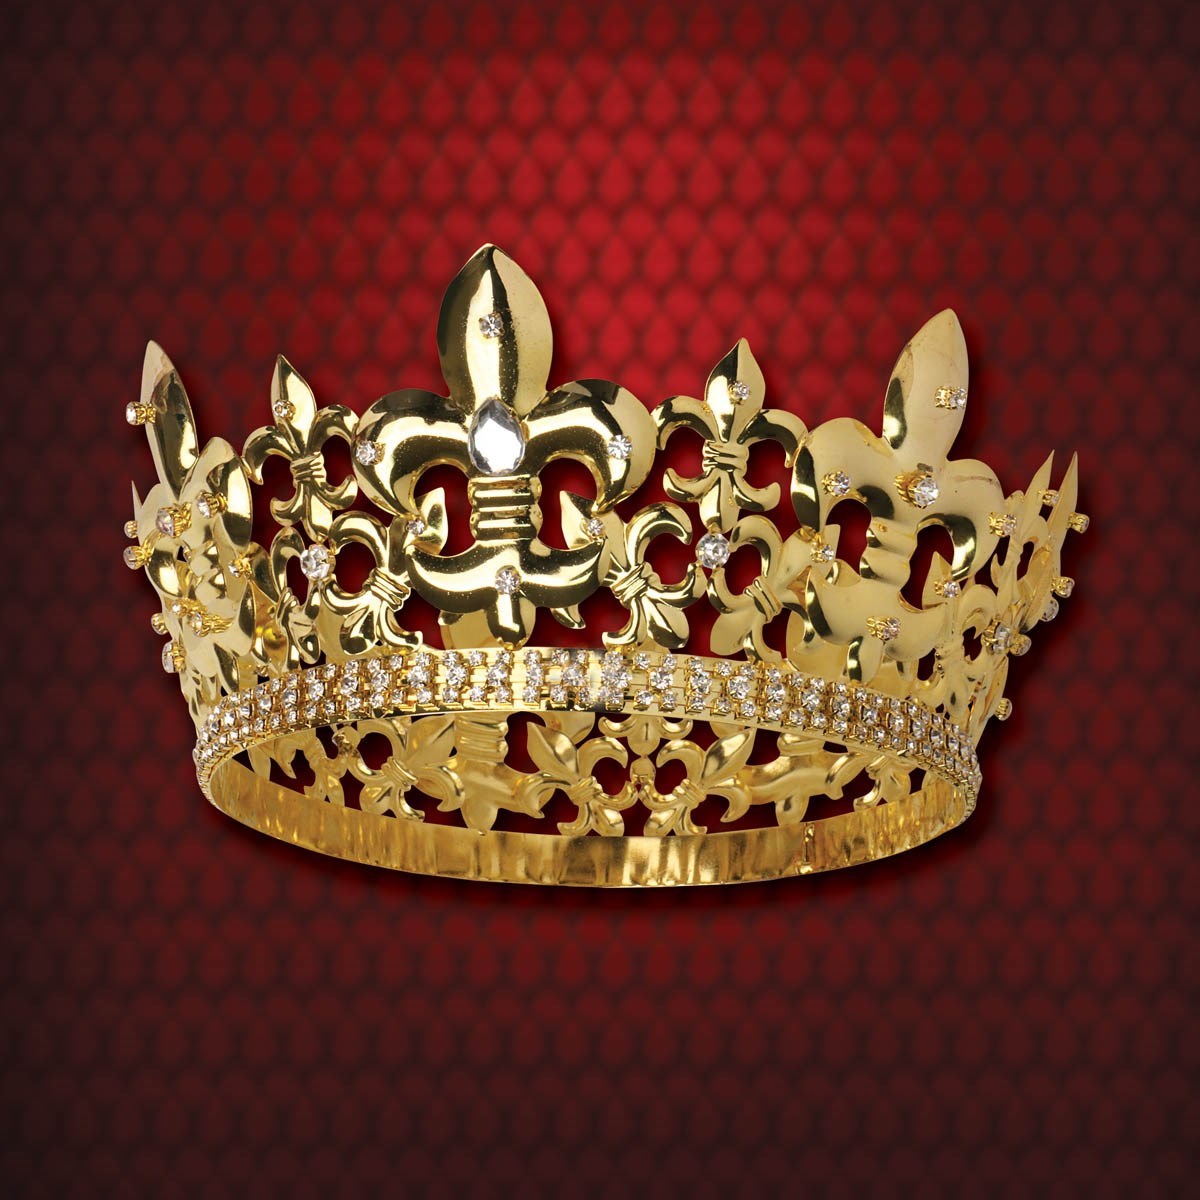 Gold Kings Crown Windlass Steelcrafts